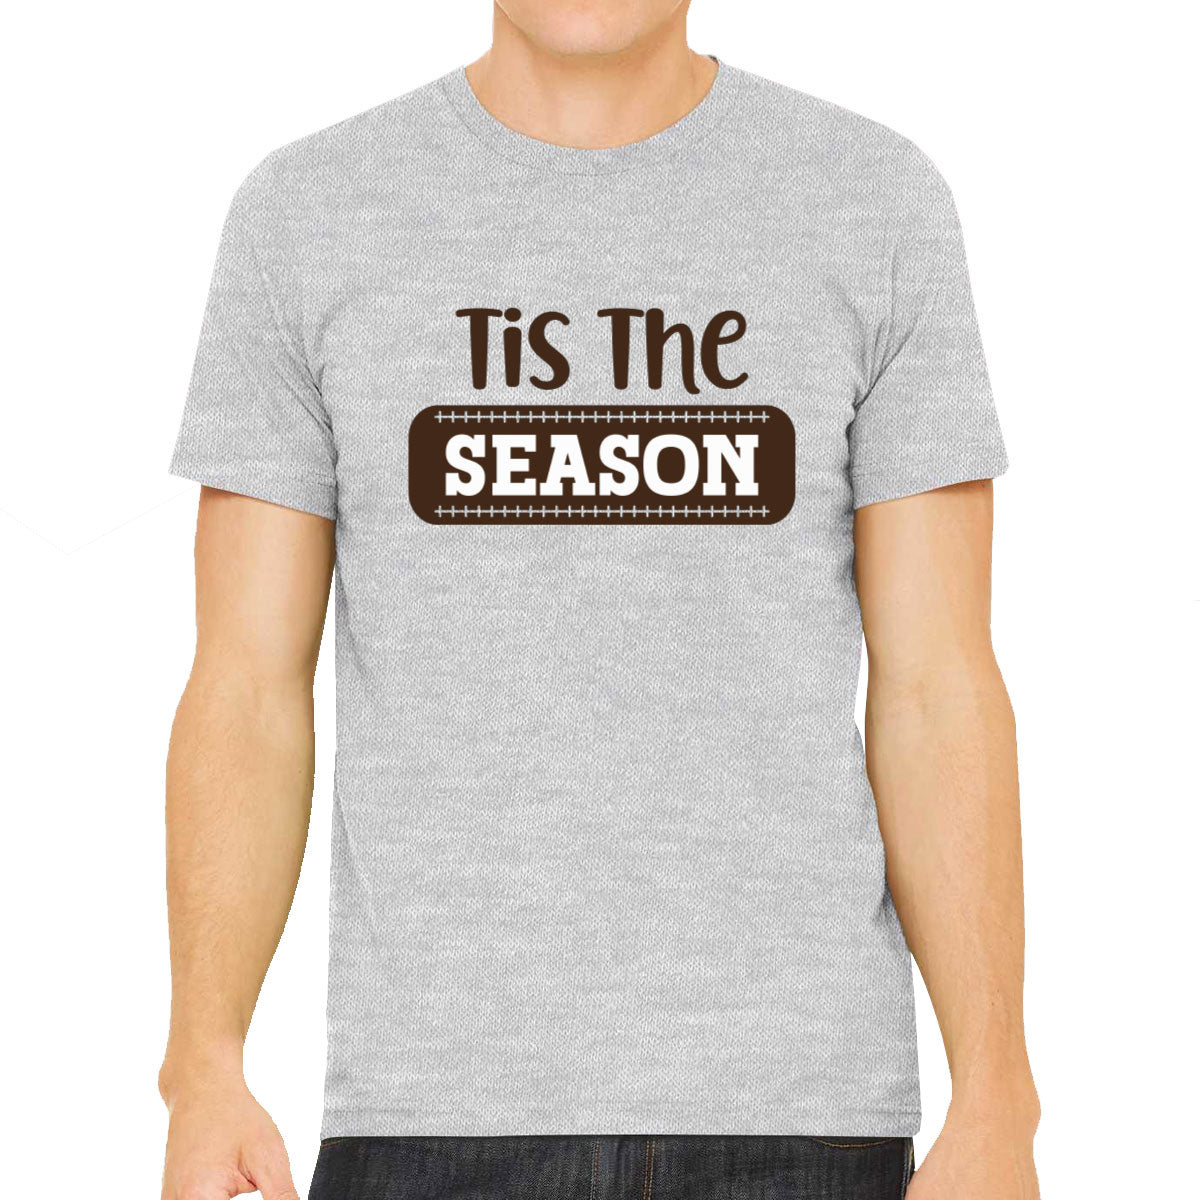 Tis The Football Season Men's T-shirt